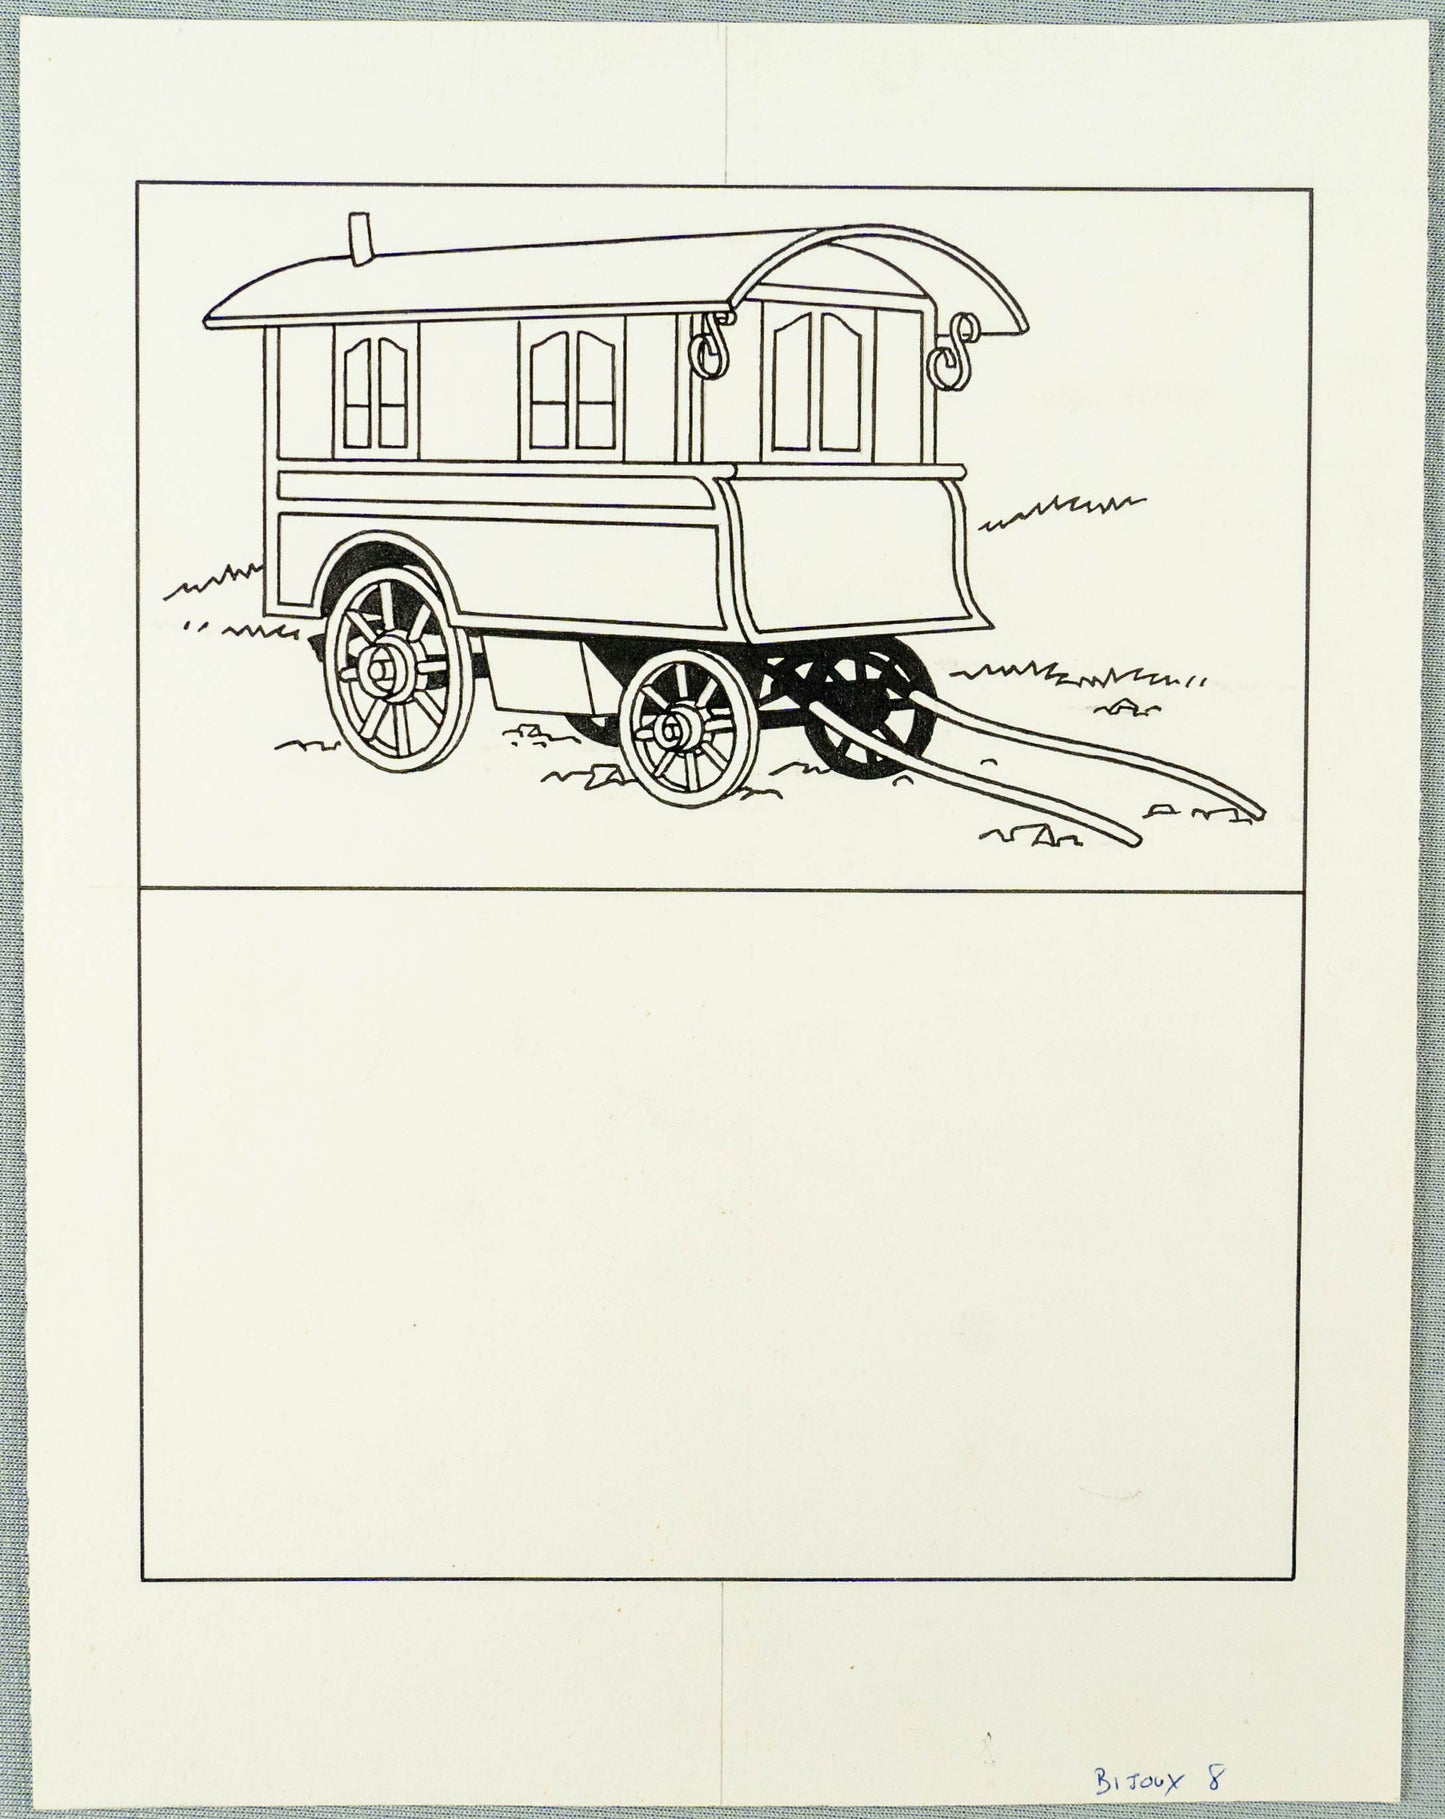 1976 Studios Herge Artwork Design: Gypsy Caravan in Black Ink Original Tintin